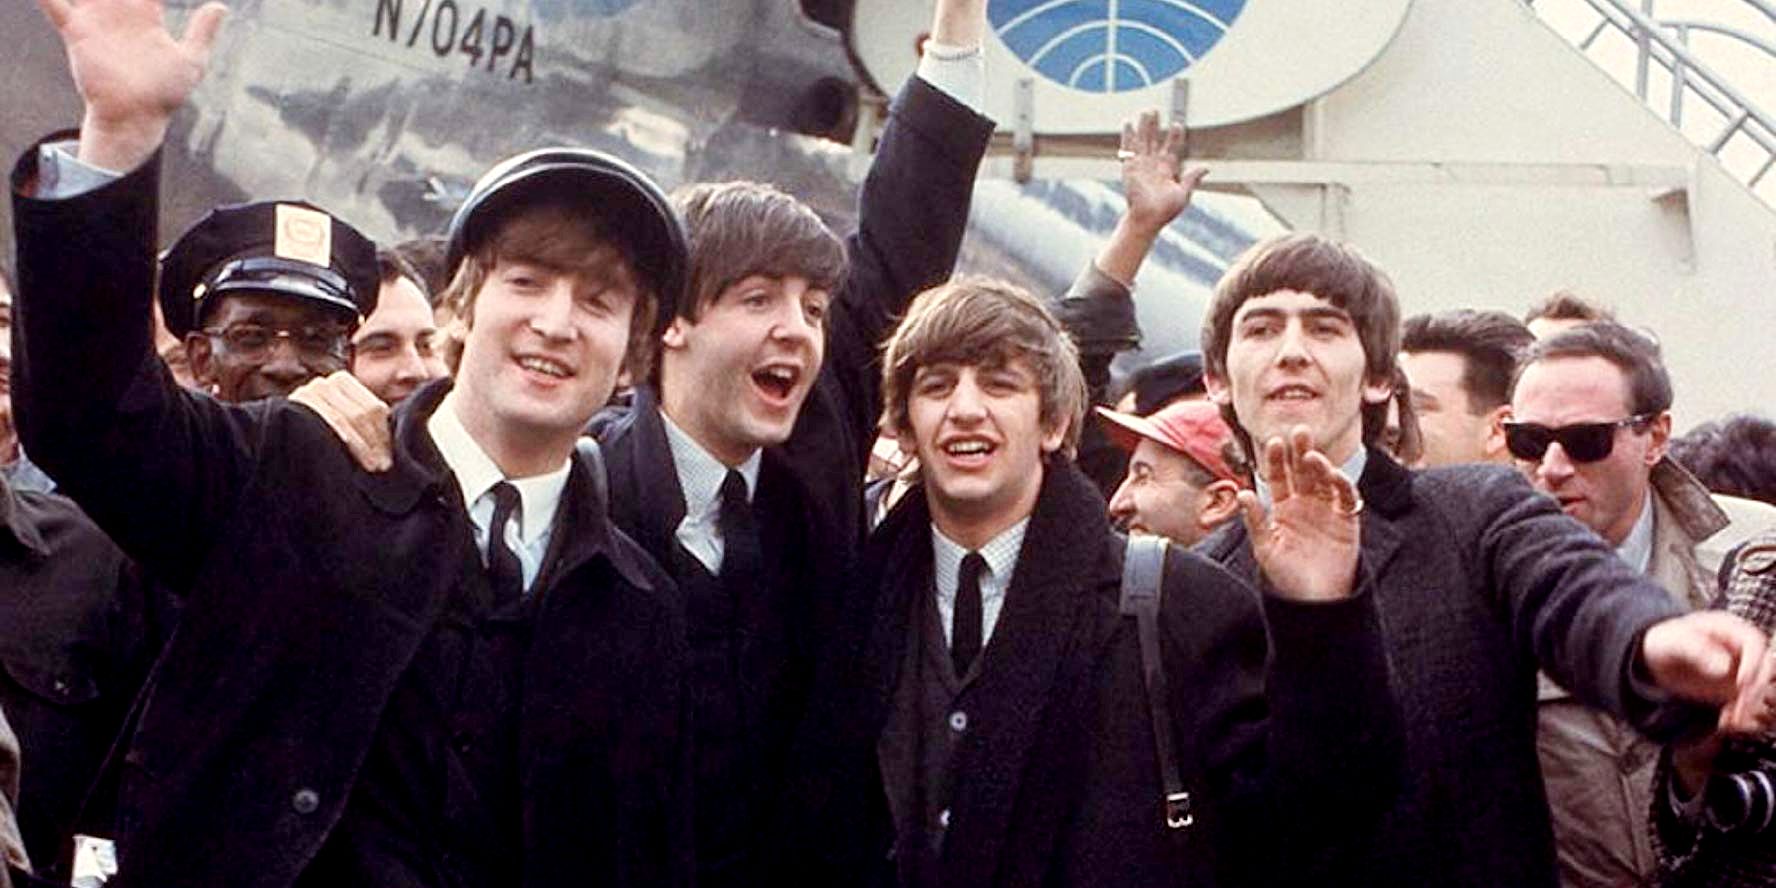 All four Beatles members in The Beatles 8 Days a Week Movie